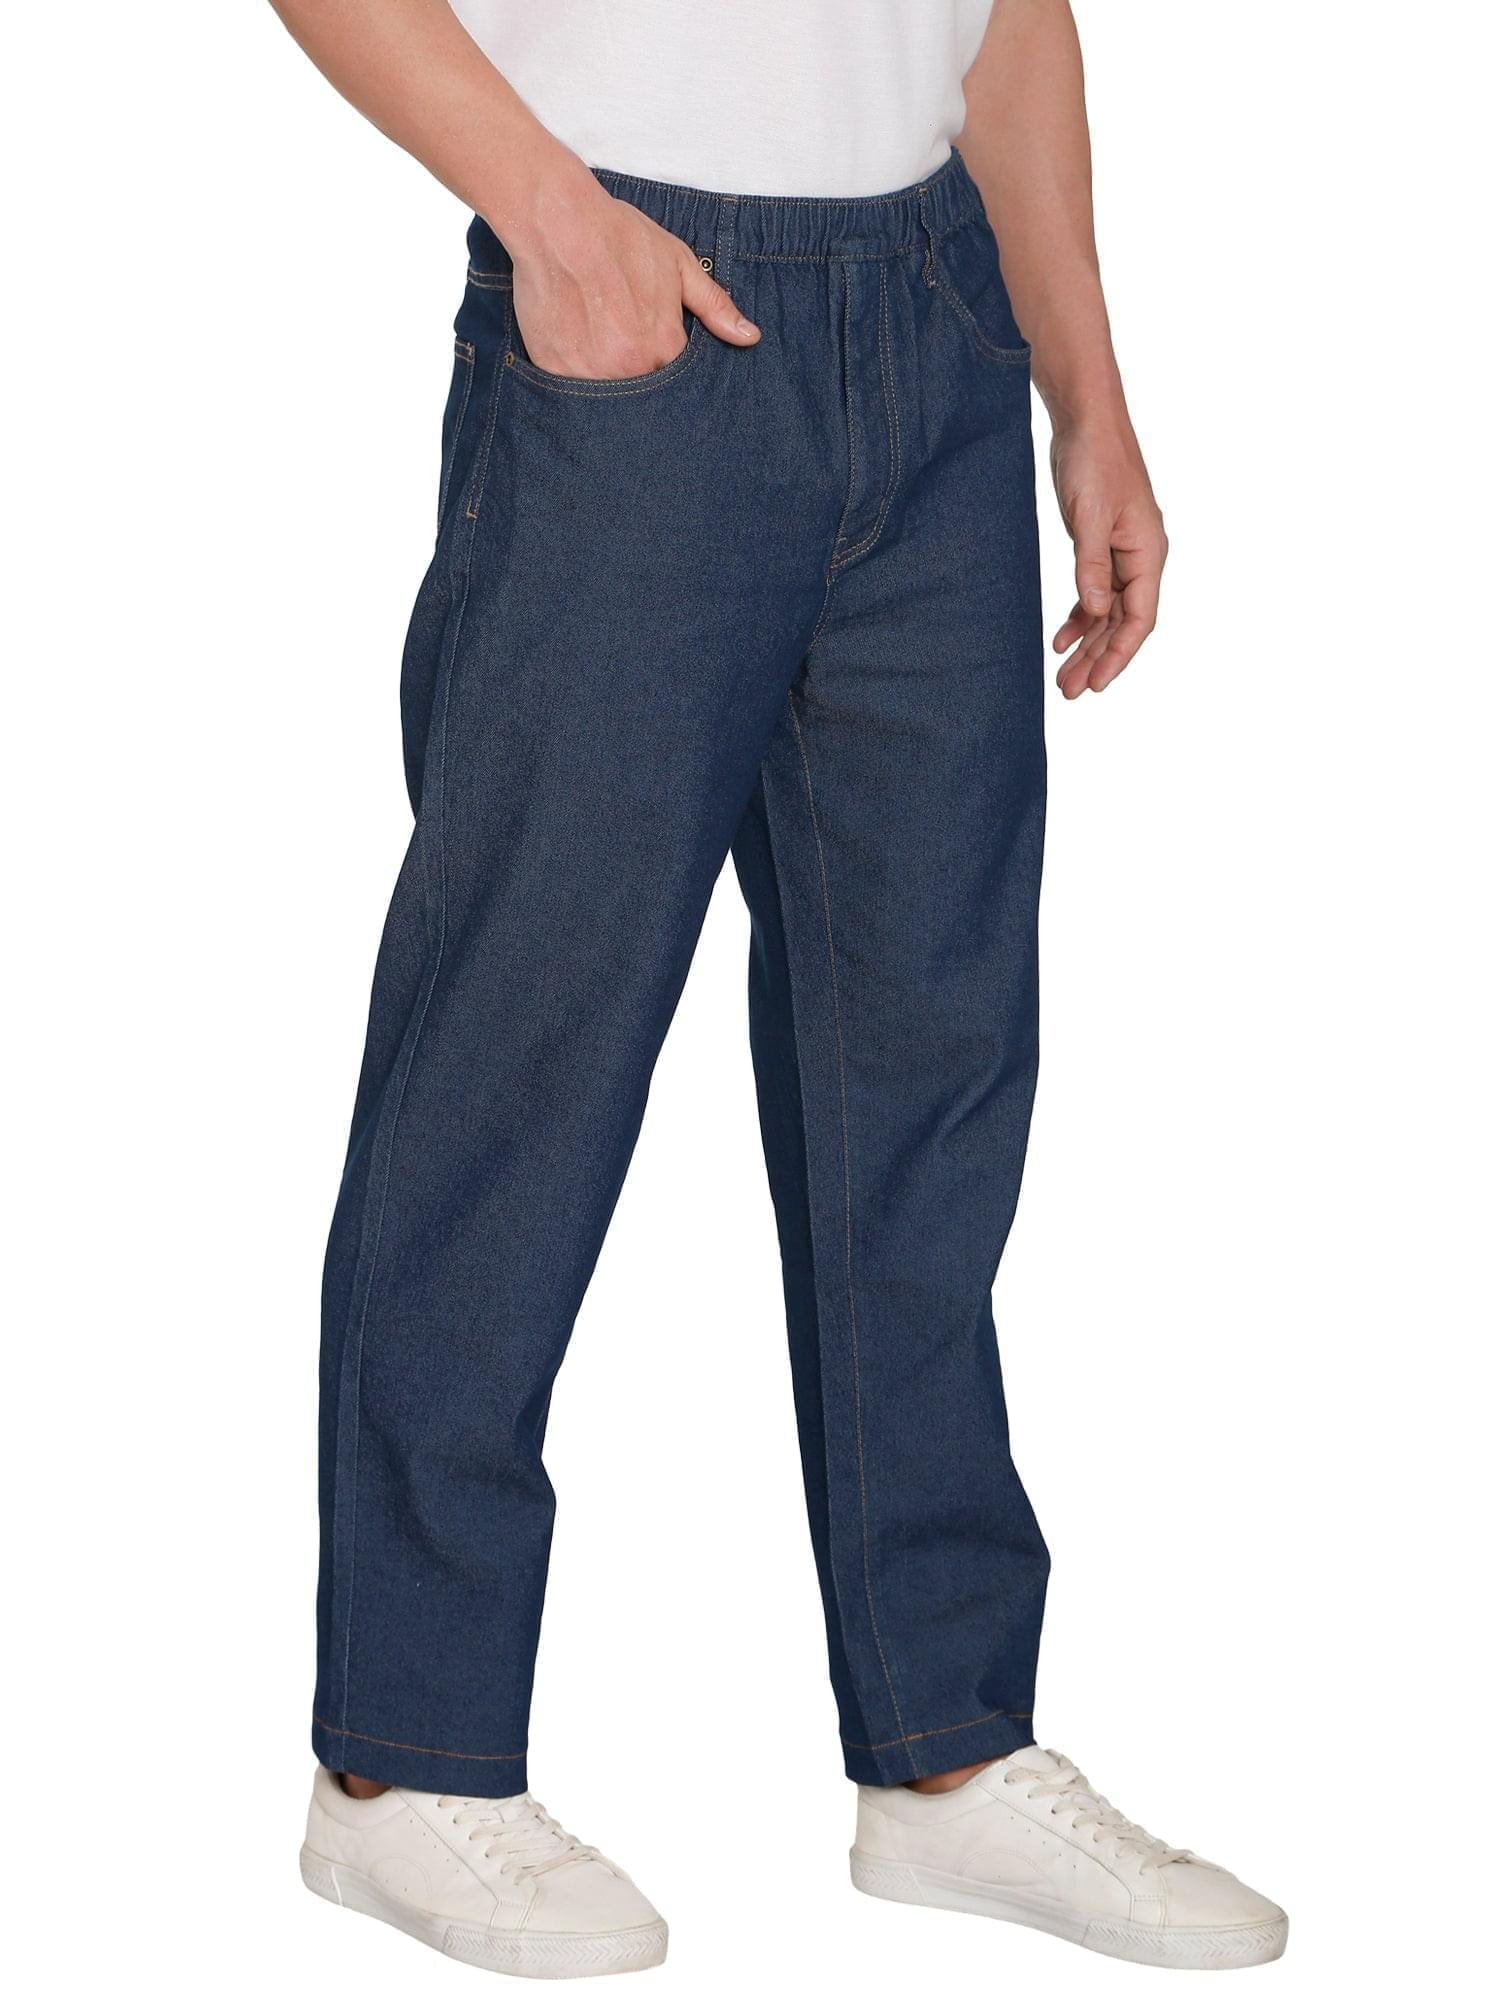 Turtle Bay New York Men's Casual Elastic Waist Denim Pull on Jeans